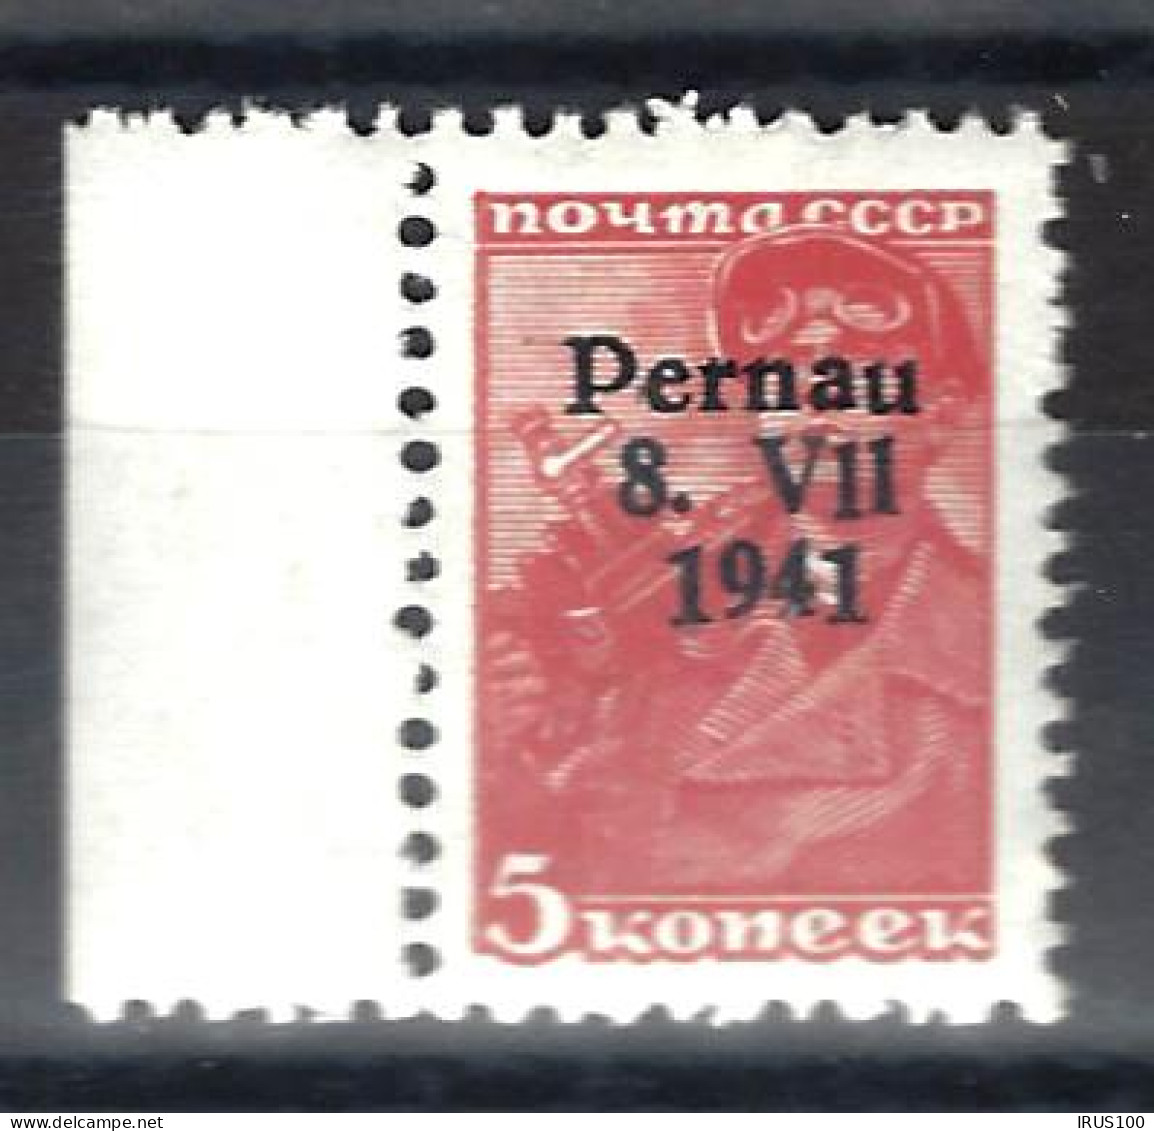 PERNAU 8.VII. 1941 - 5K - MICHEL TYPE 1 - MNH ** - Estonia